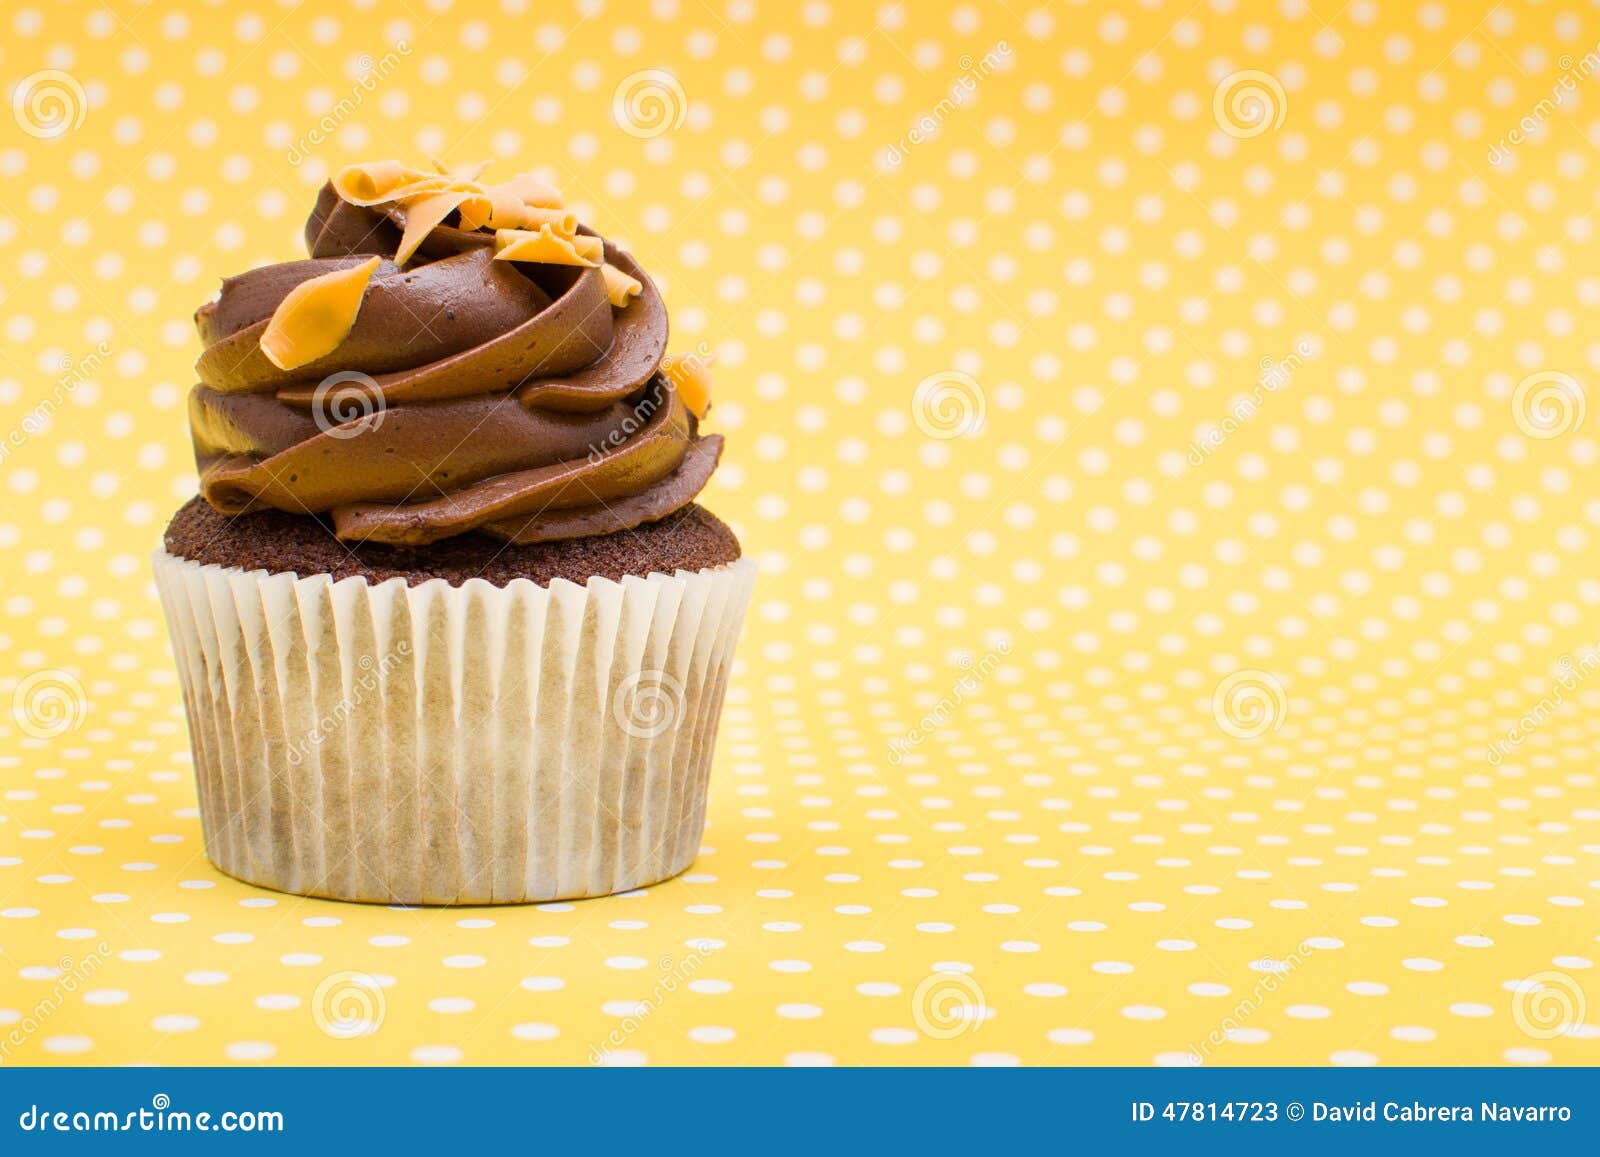 Cupcake stock image. Image of vintage, dots, cupcakes - 47814723